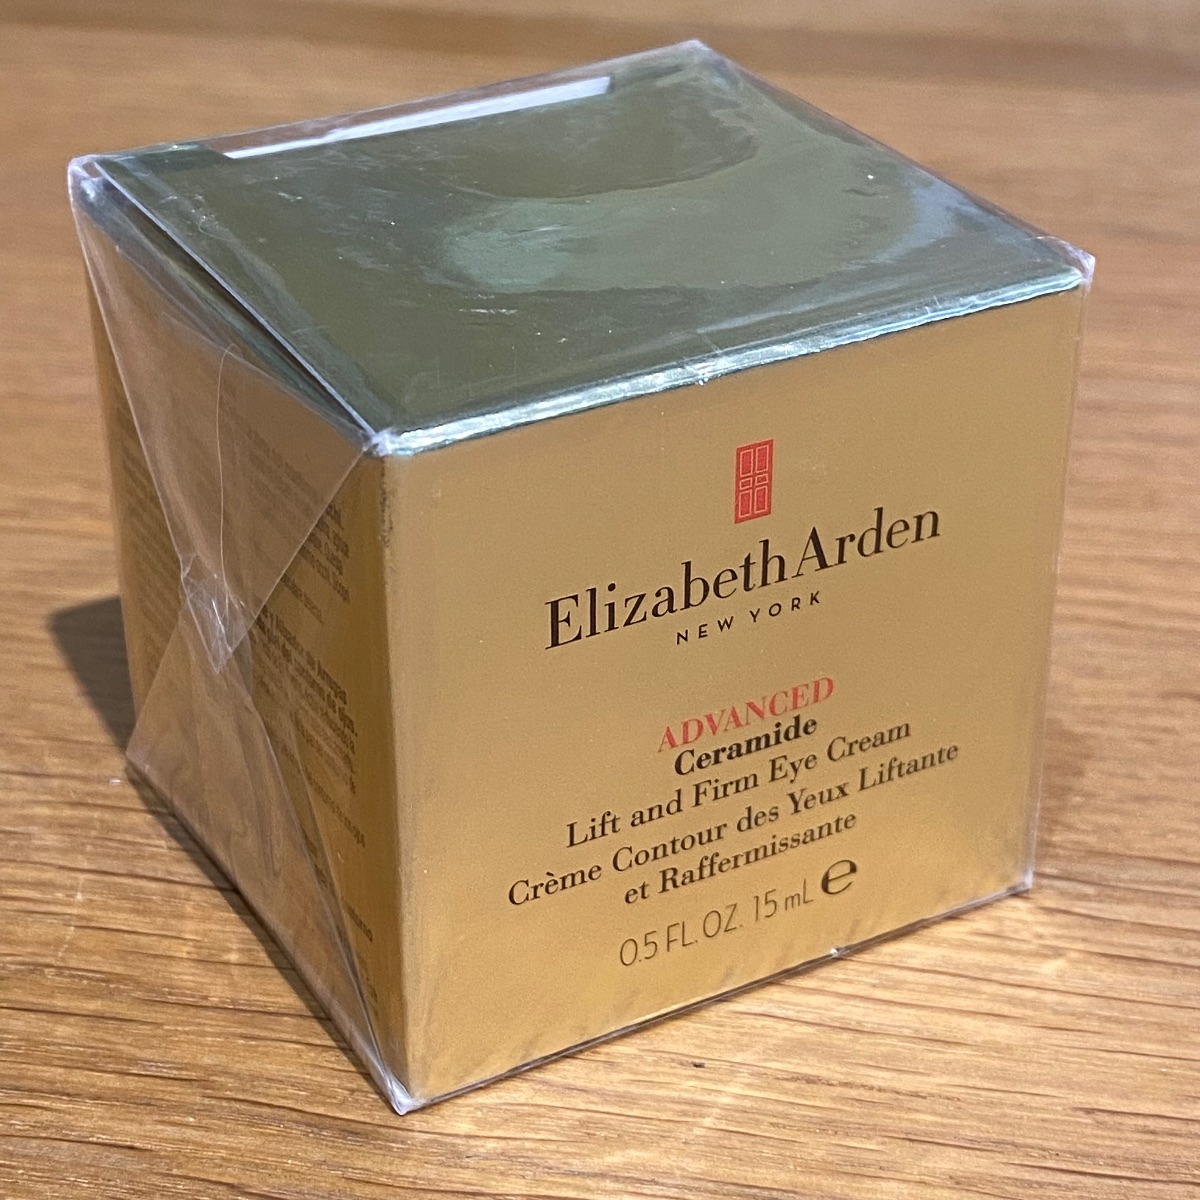 Elizabeth Arden Ceramide Advanced Lift and Firm Eye Cream 15ml Skincare EYE CREAM 85805410995 (Brand New)